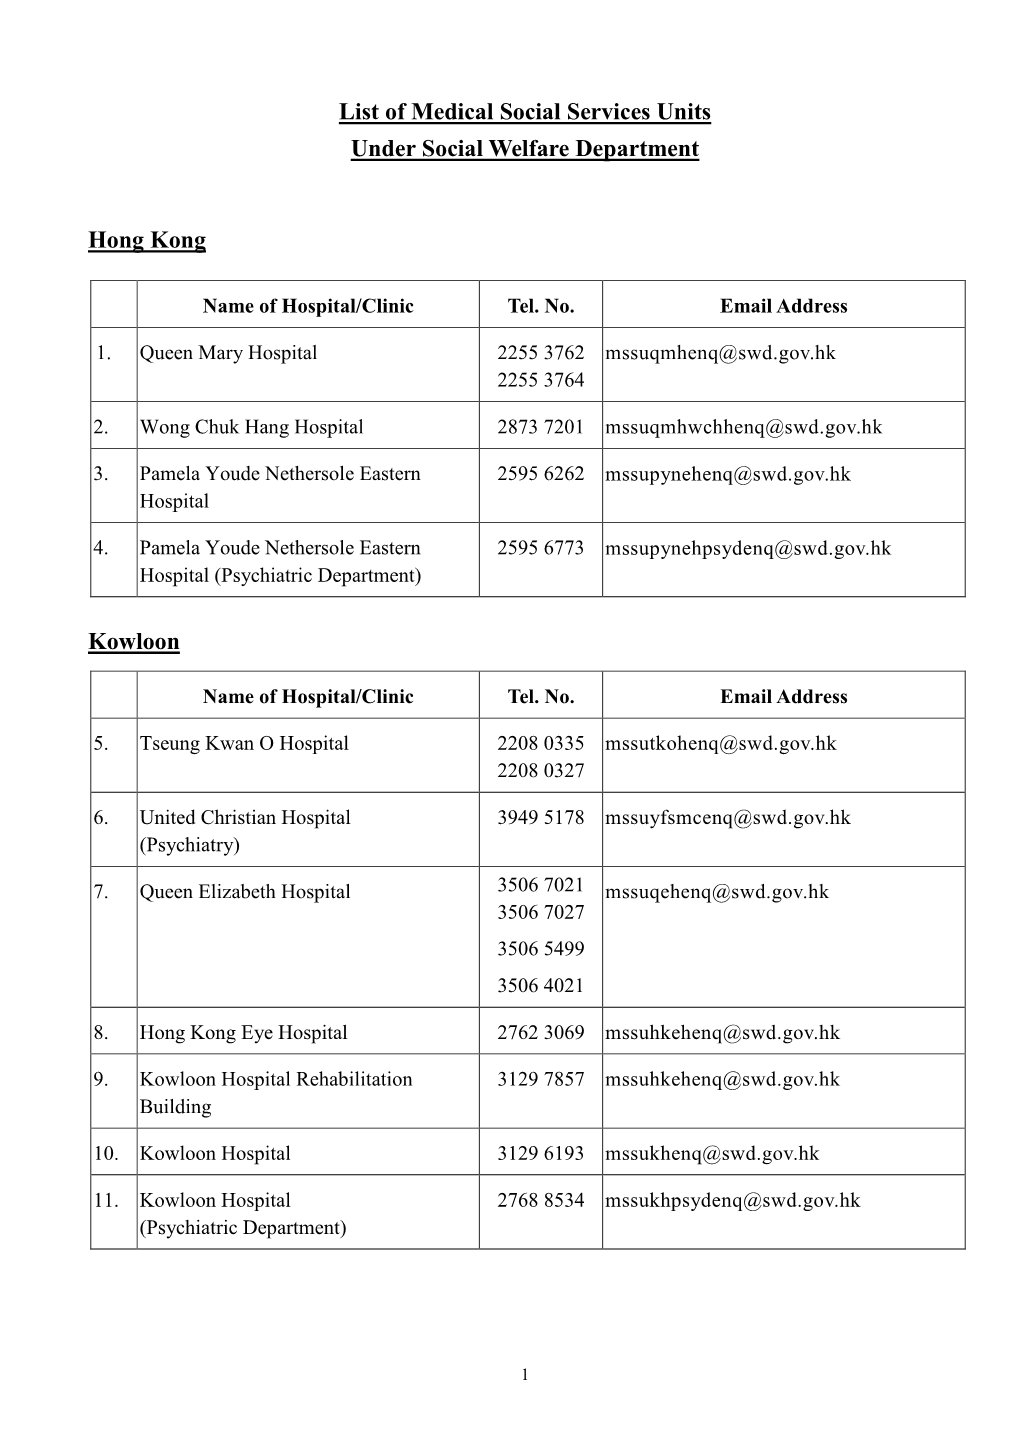 List of Medical Social Services Units Under Social Welfare Department